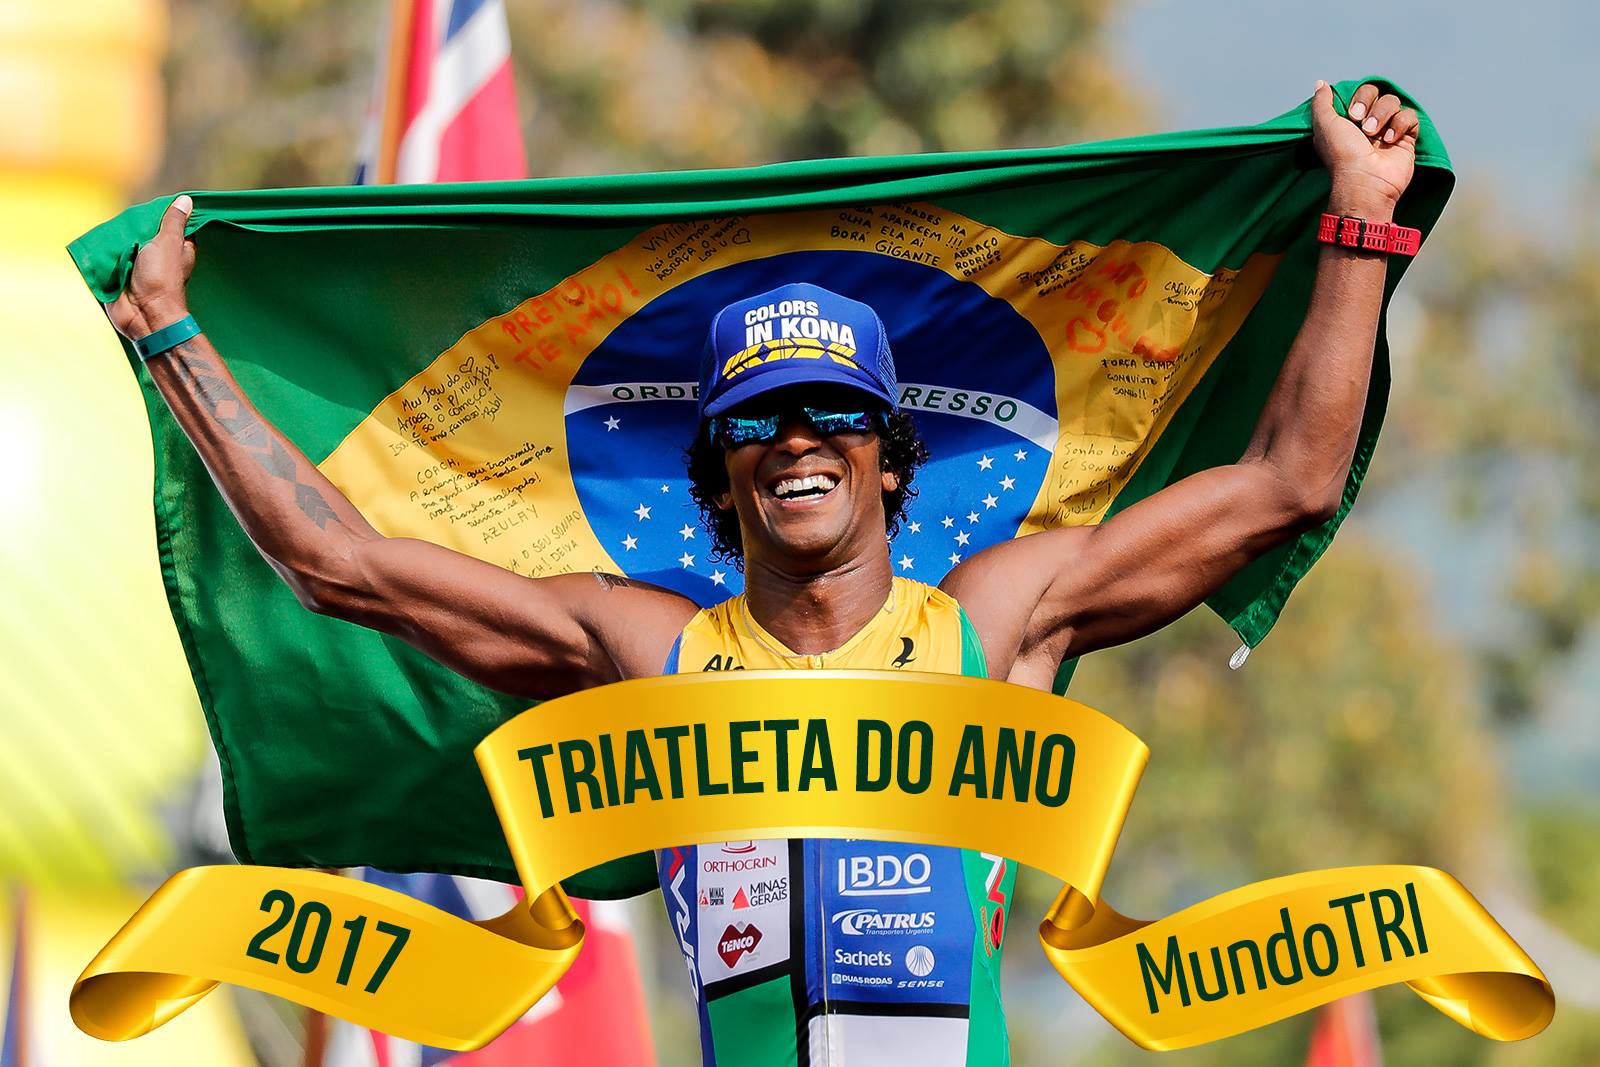 thiago nr 13 and best brasil in kona _ photo = mundo tri